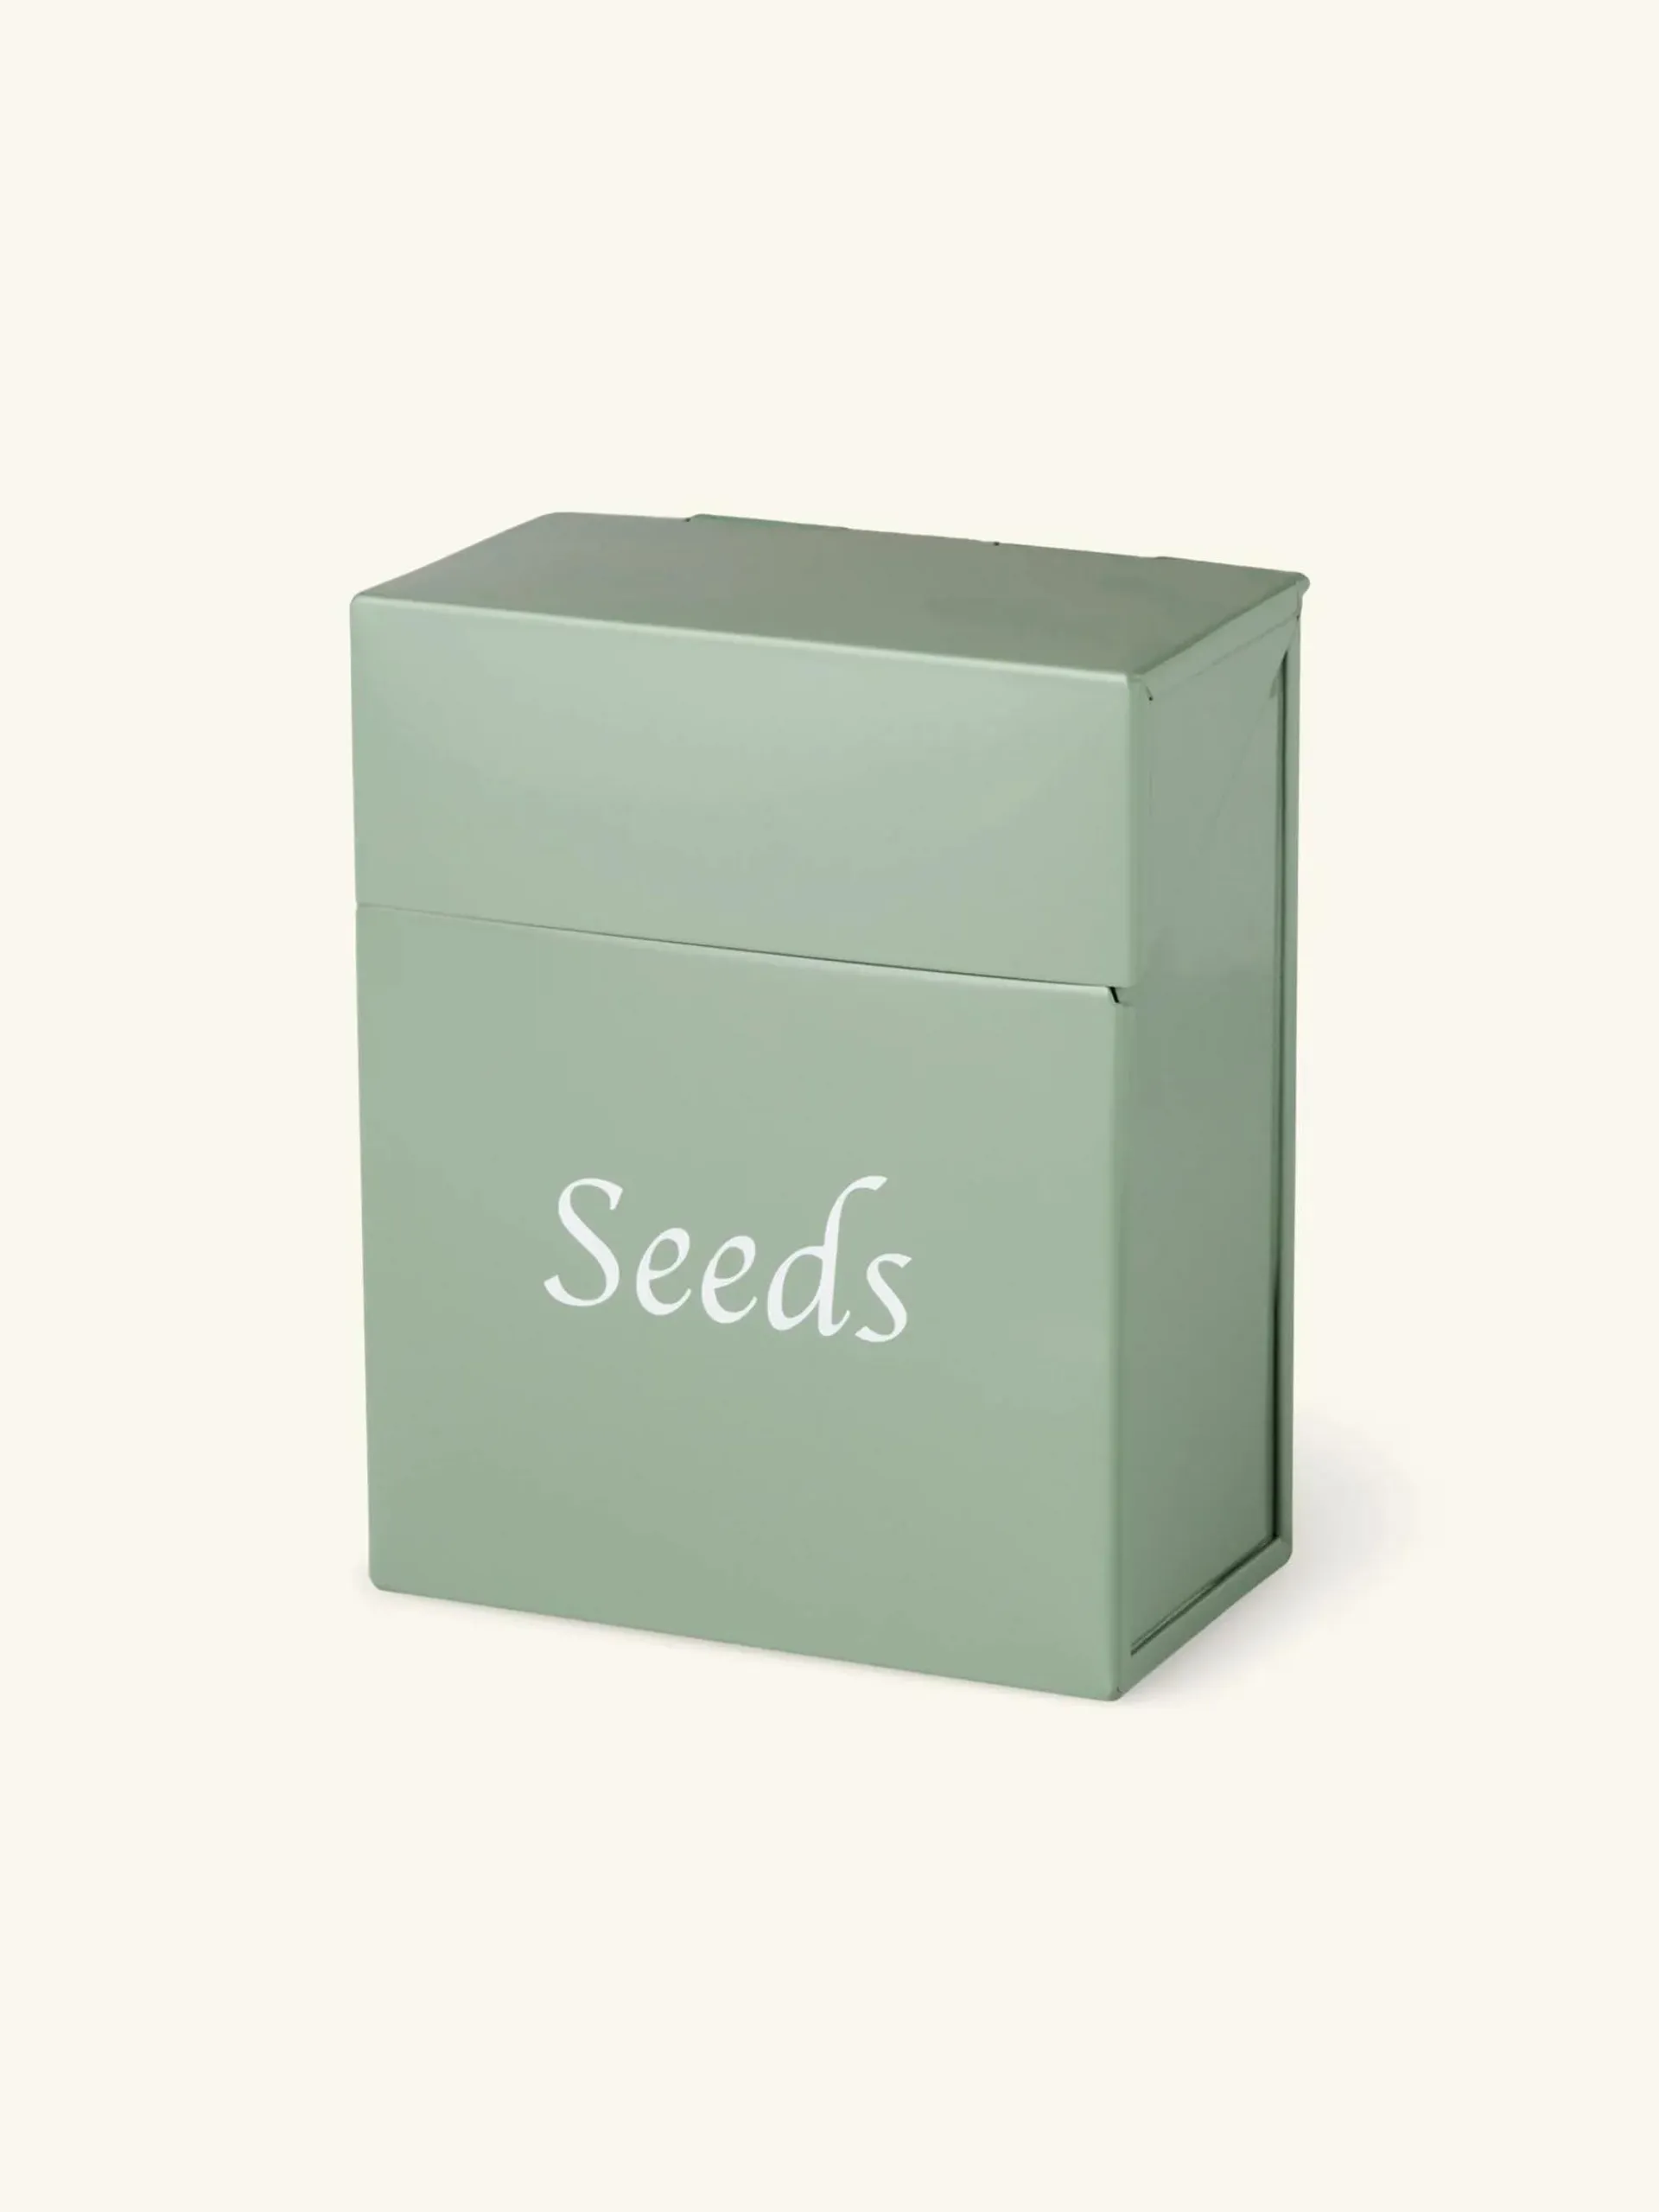 Seed box